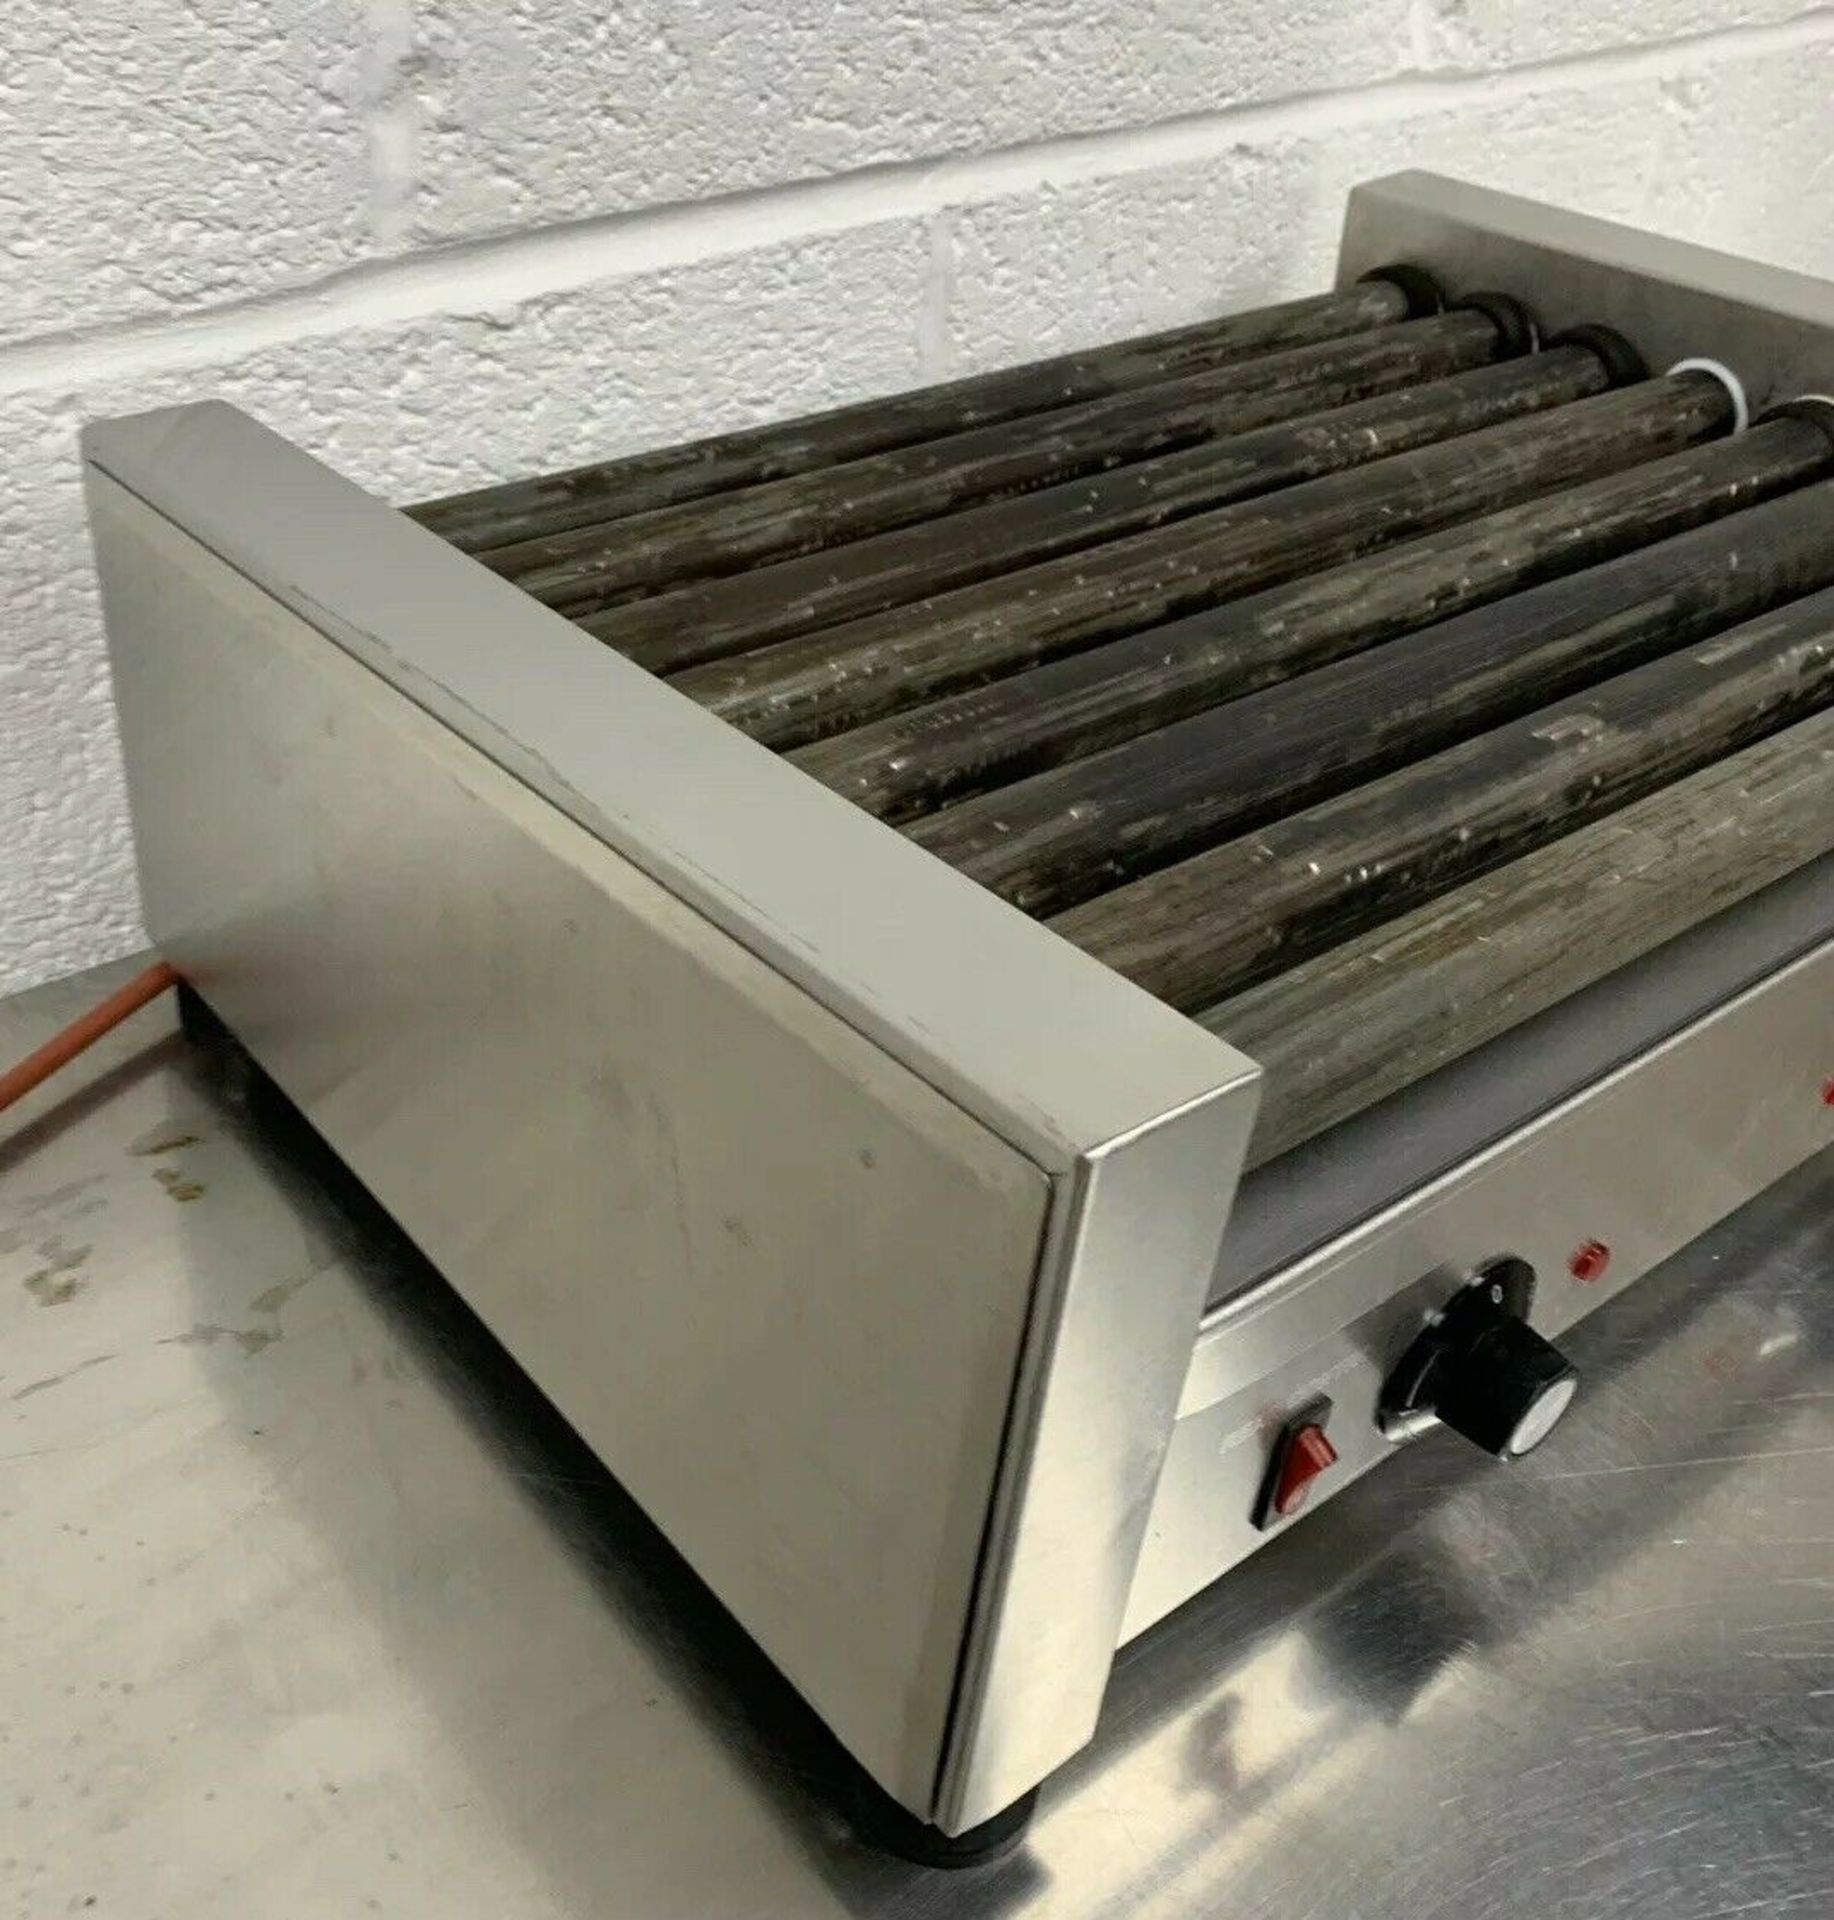 Hot dog grill/warmer FKI GL8 - Image 2 of 4